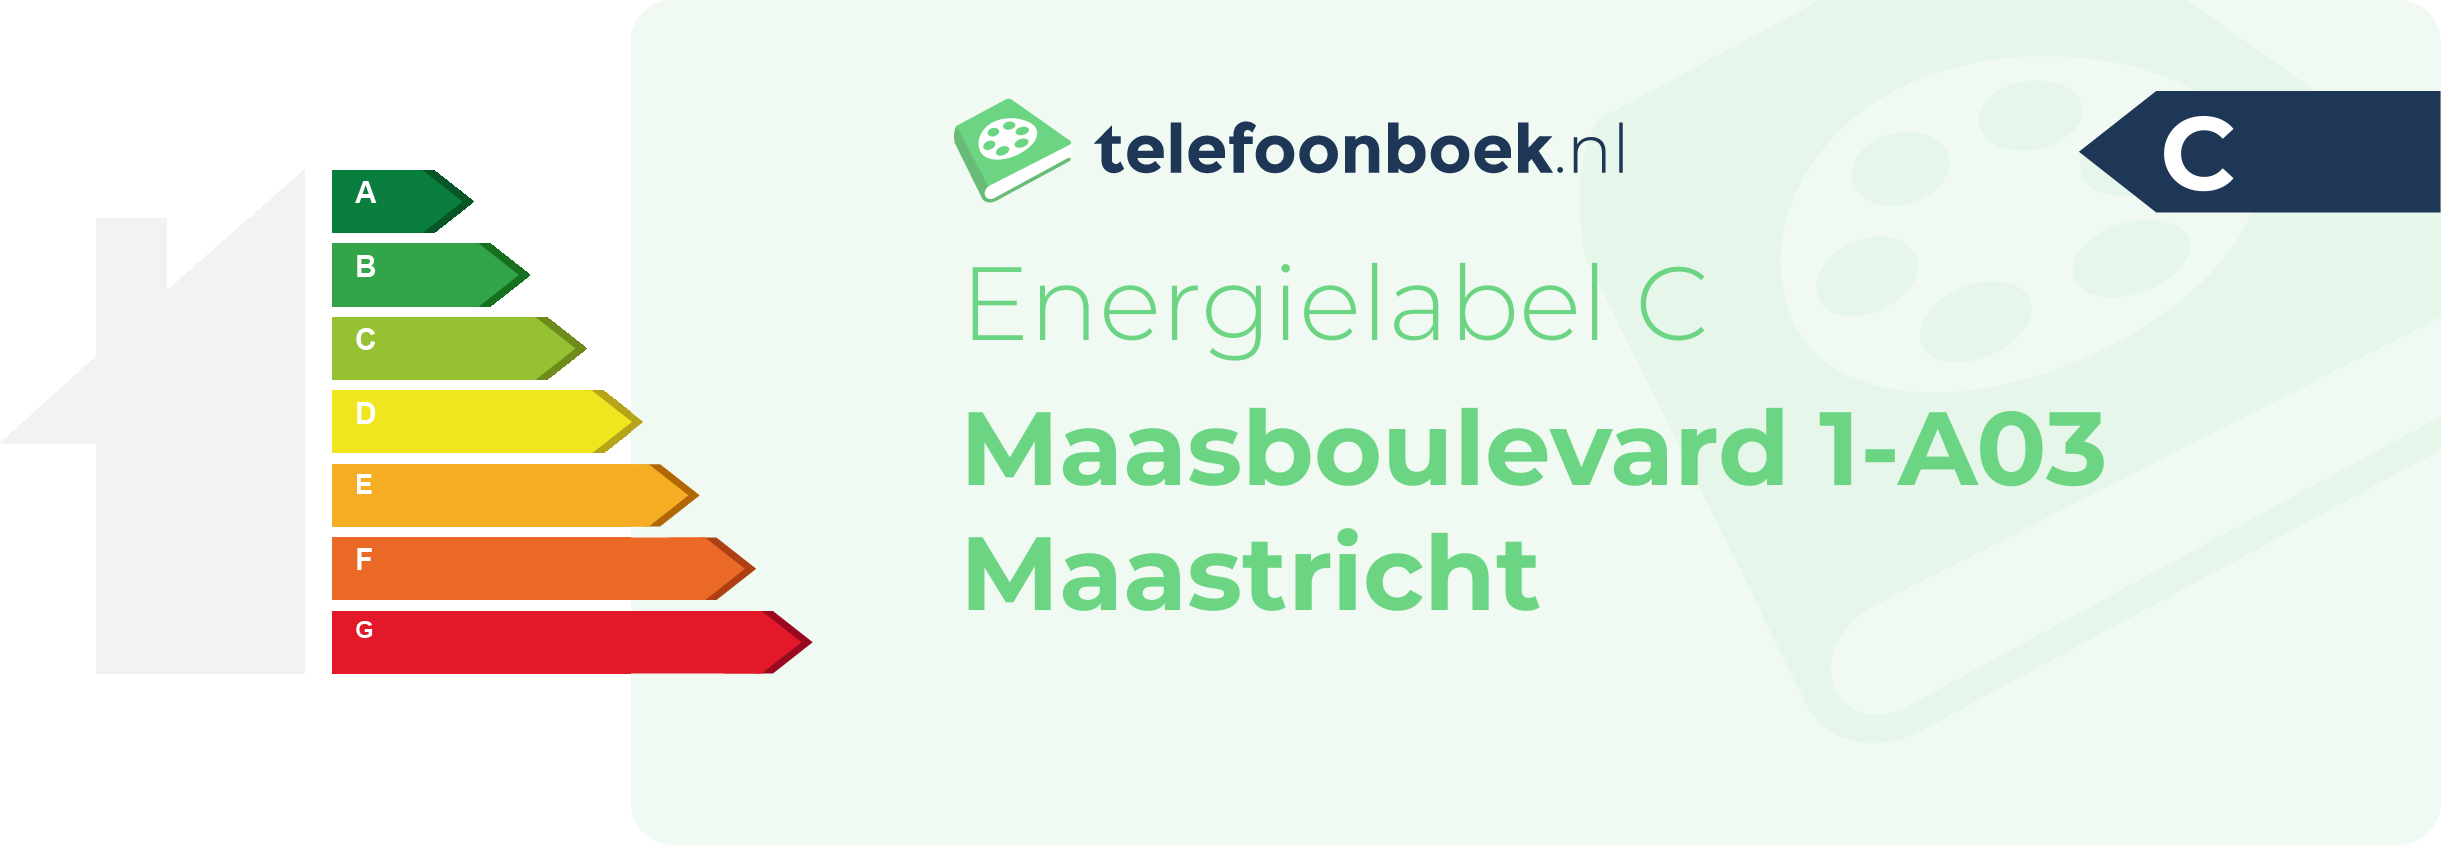 Energielabel Maasboulevard 1-A03 Maastricht